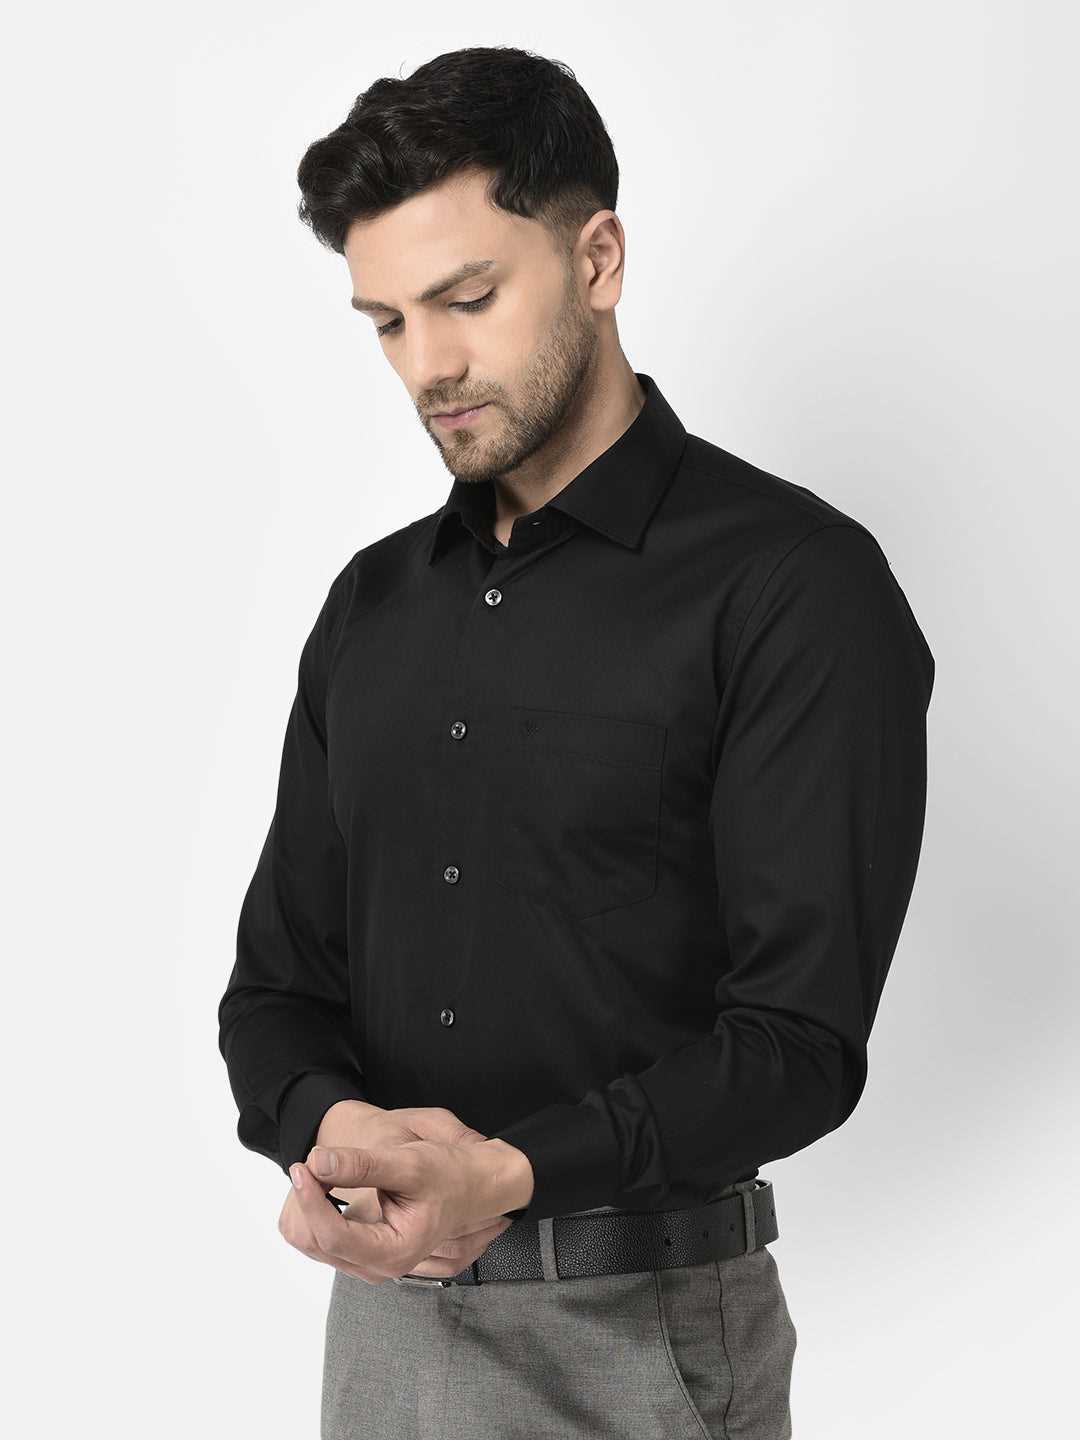 Cobb Black Solid Slim Fit Formal Shirt Black XL-42